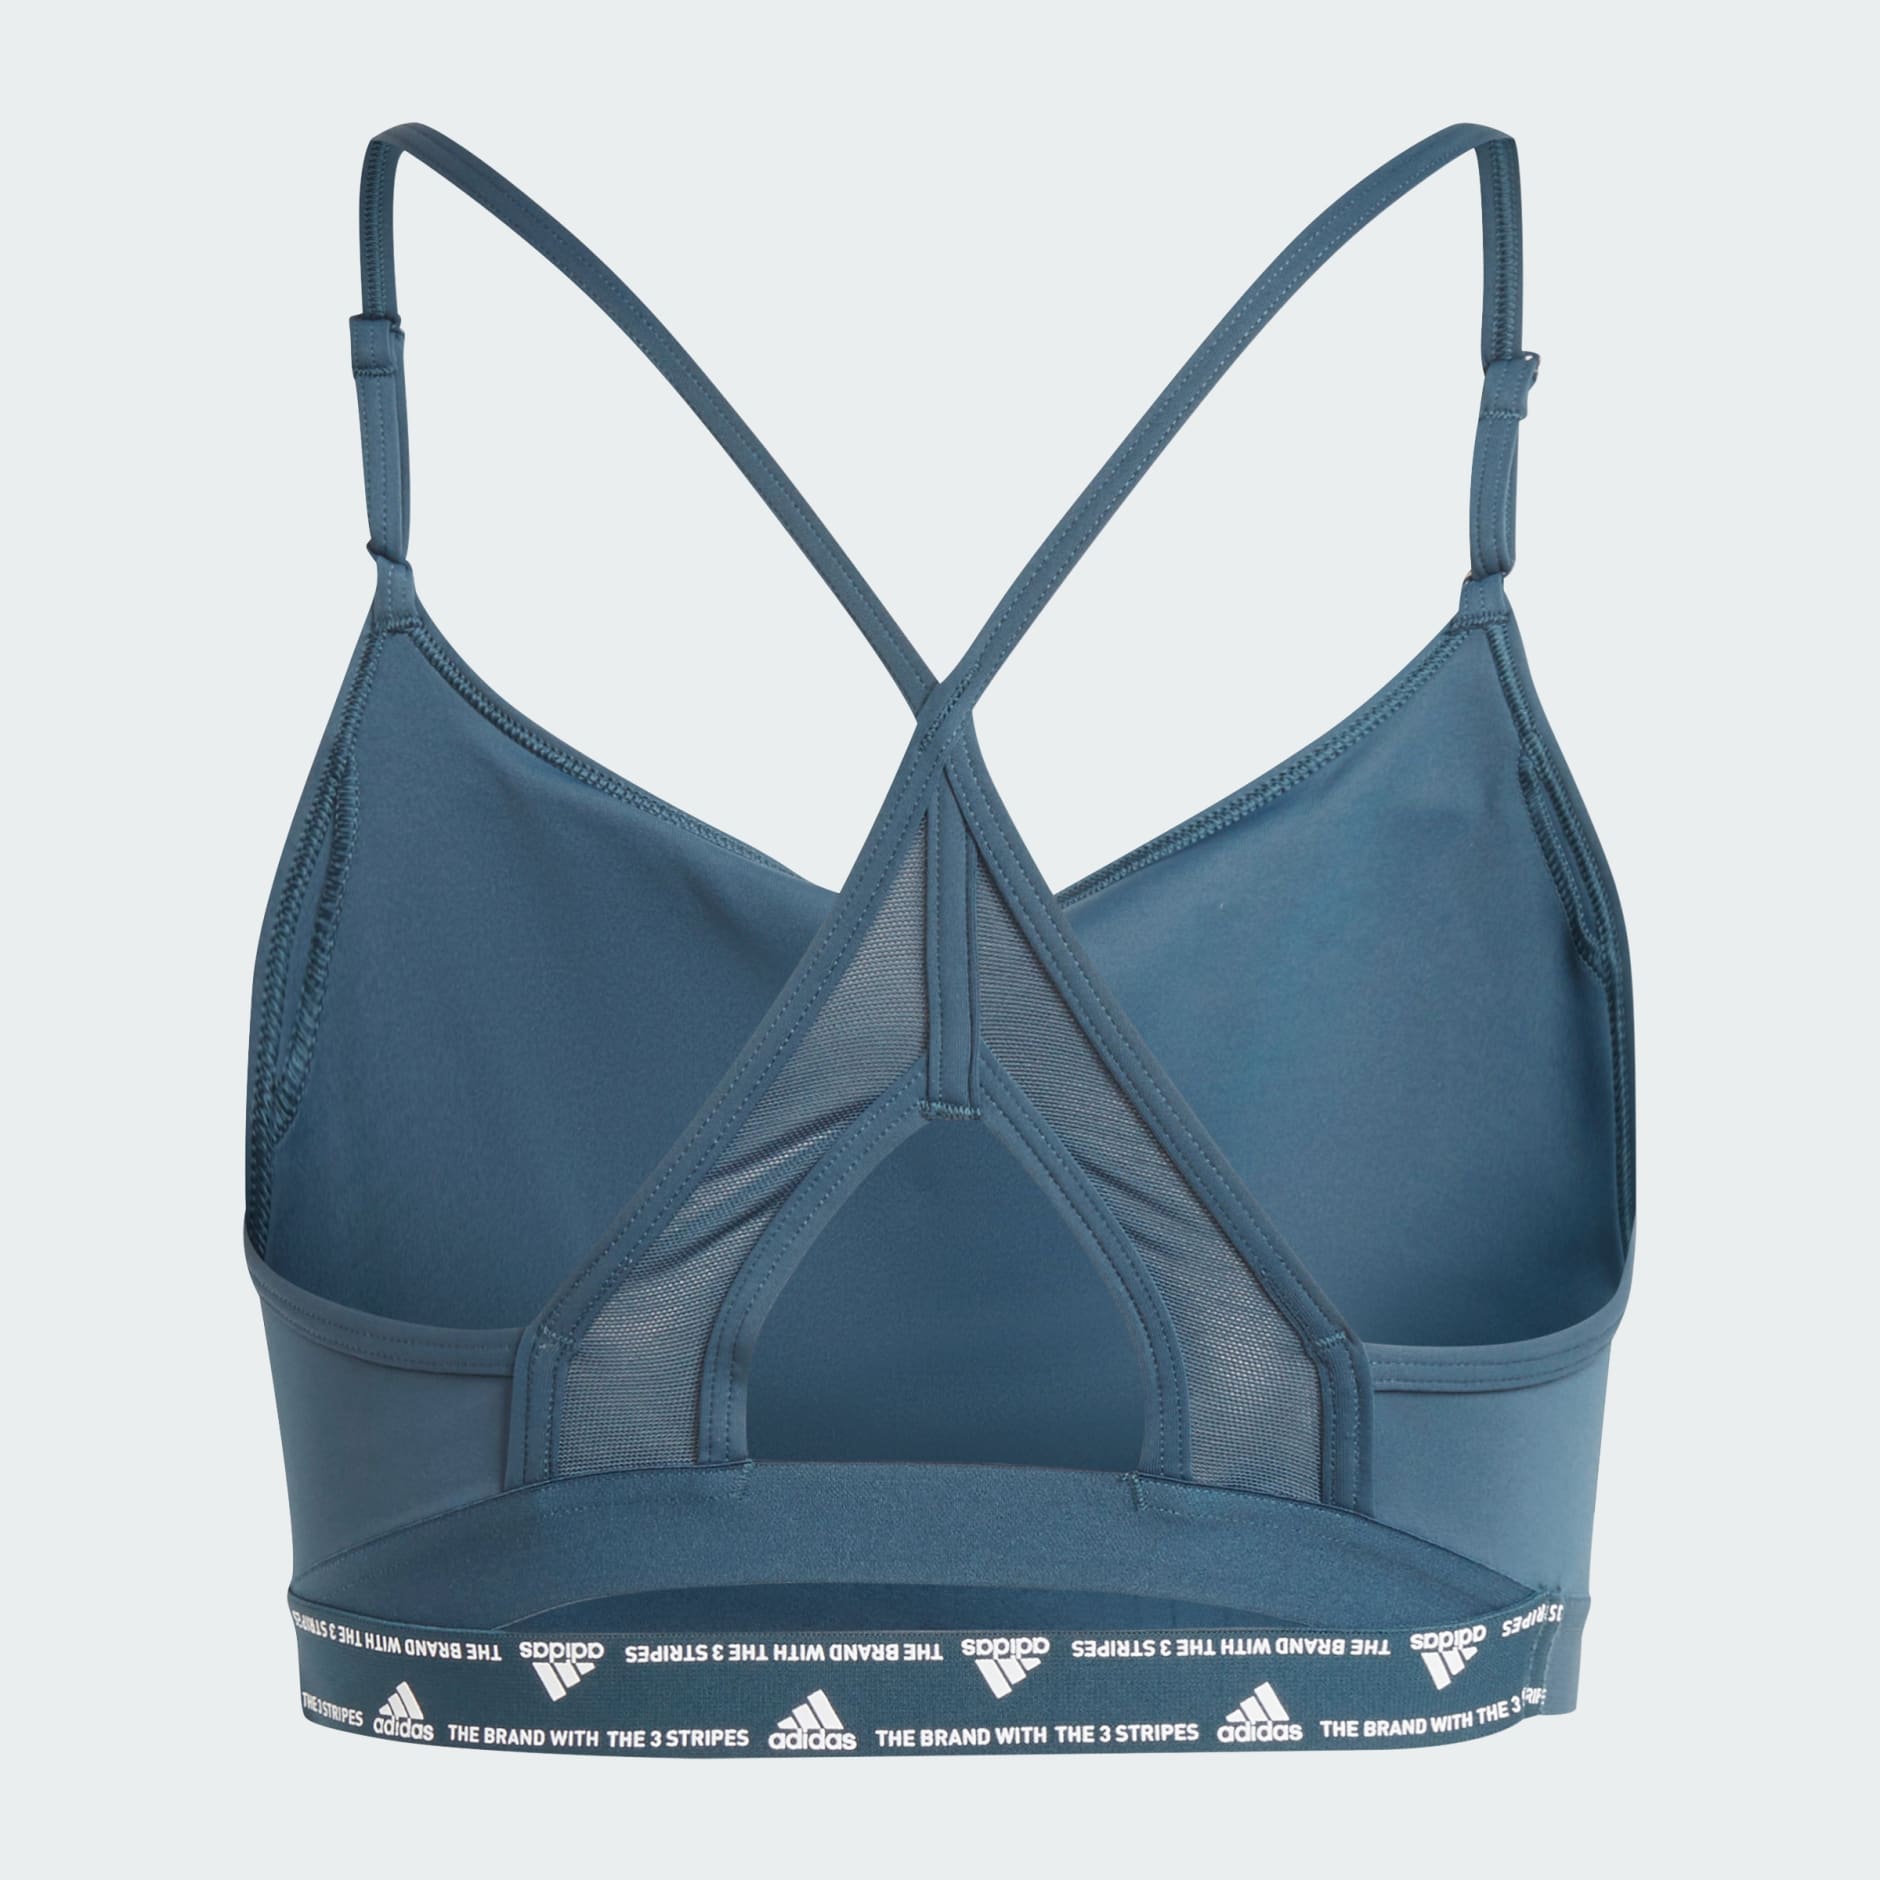 Women's Clothing - Aeroreact Training Light-Support Bra - Turquoise